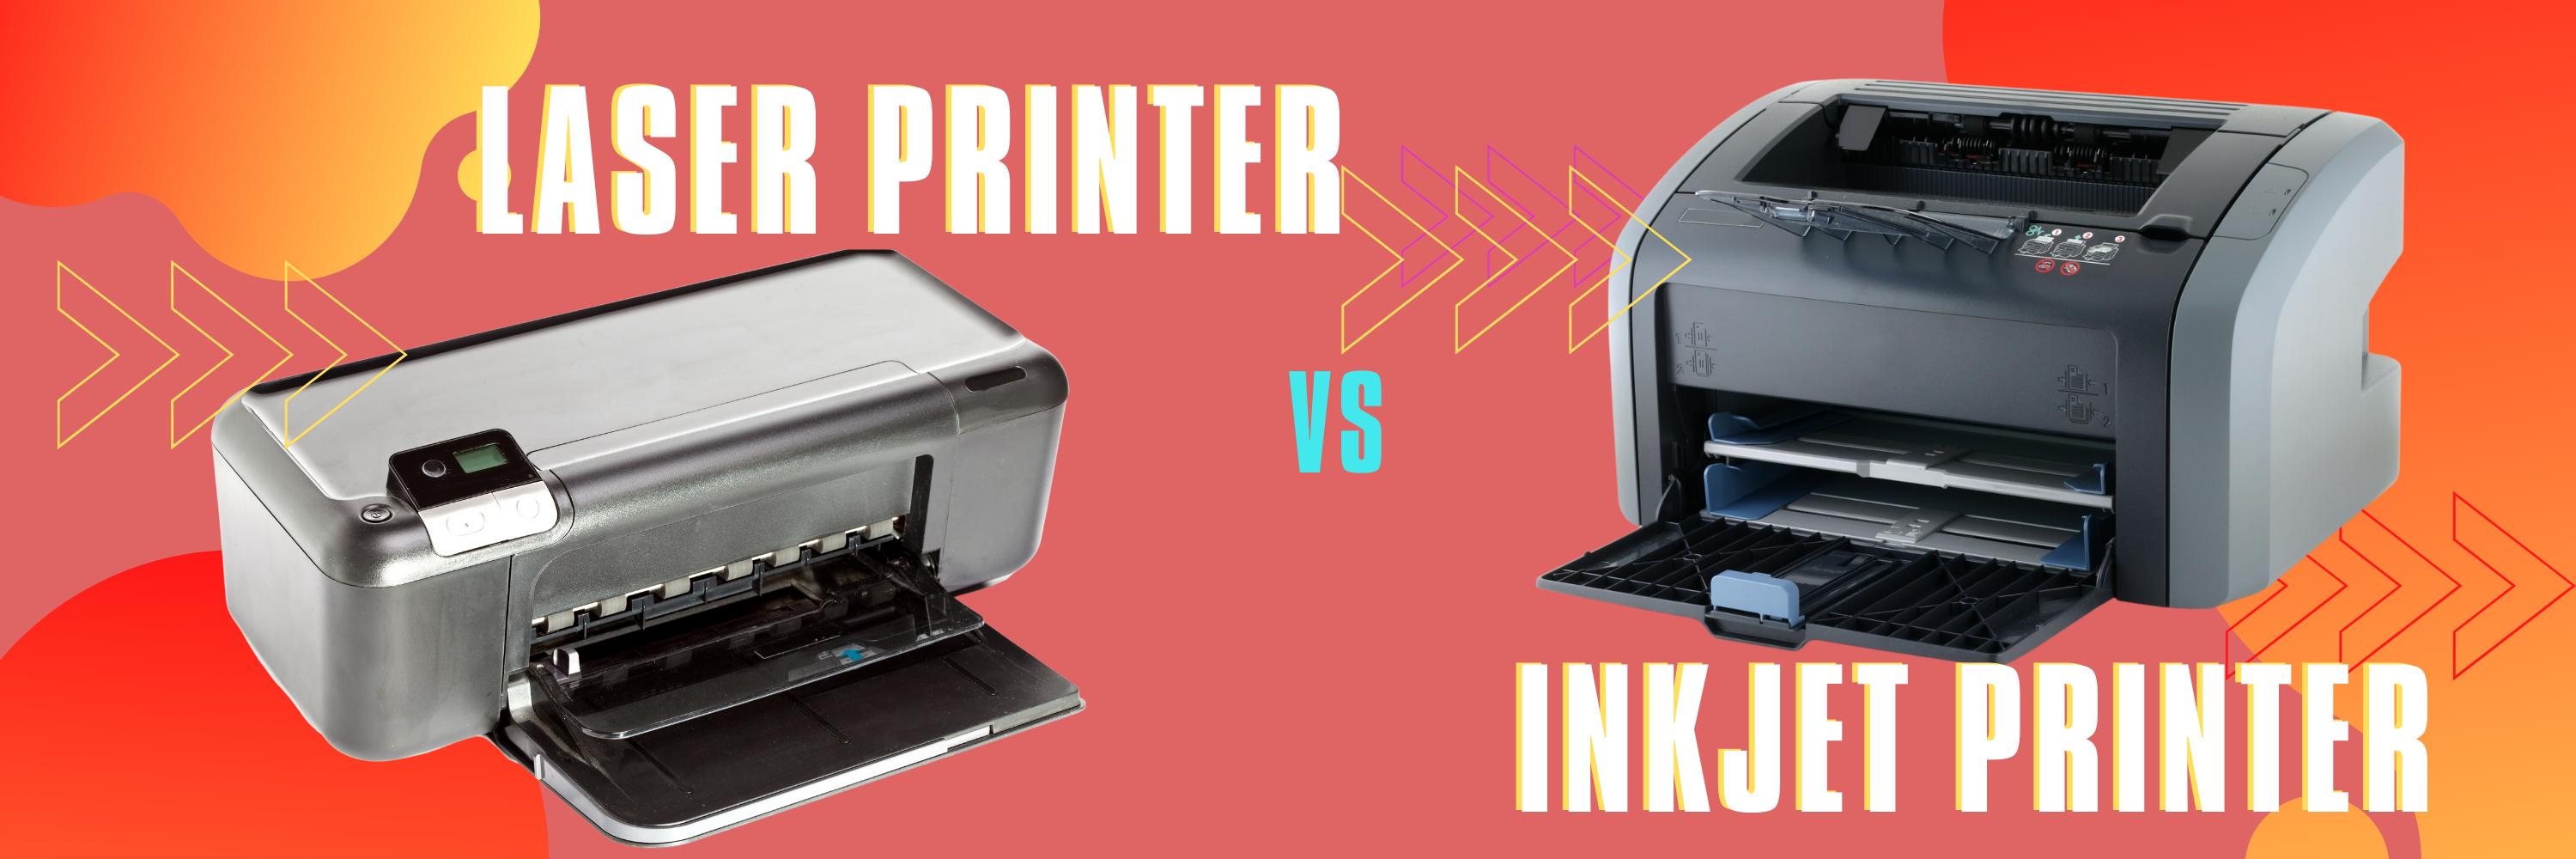 Laser Printer Vs Inkjet Cost Per Cost Effective – Laser Tek Services